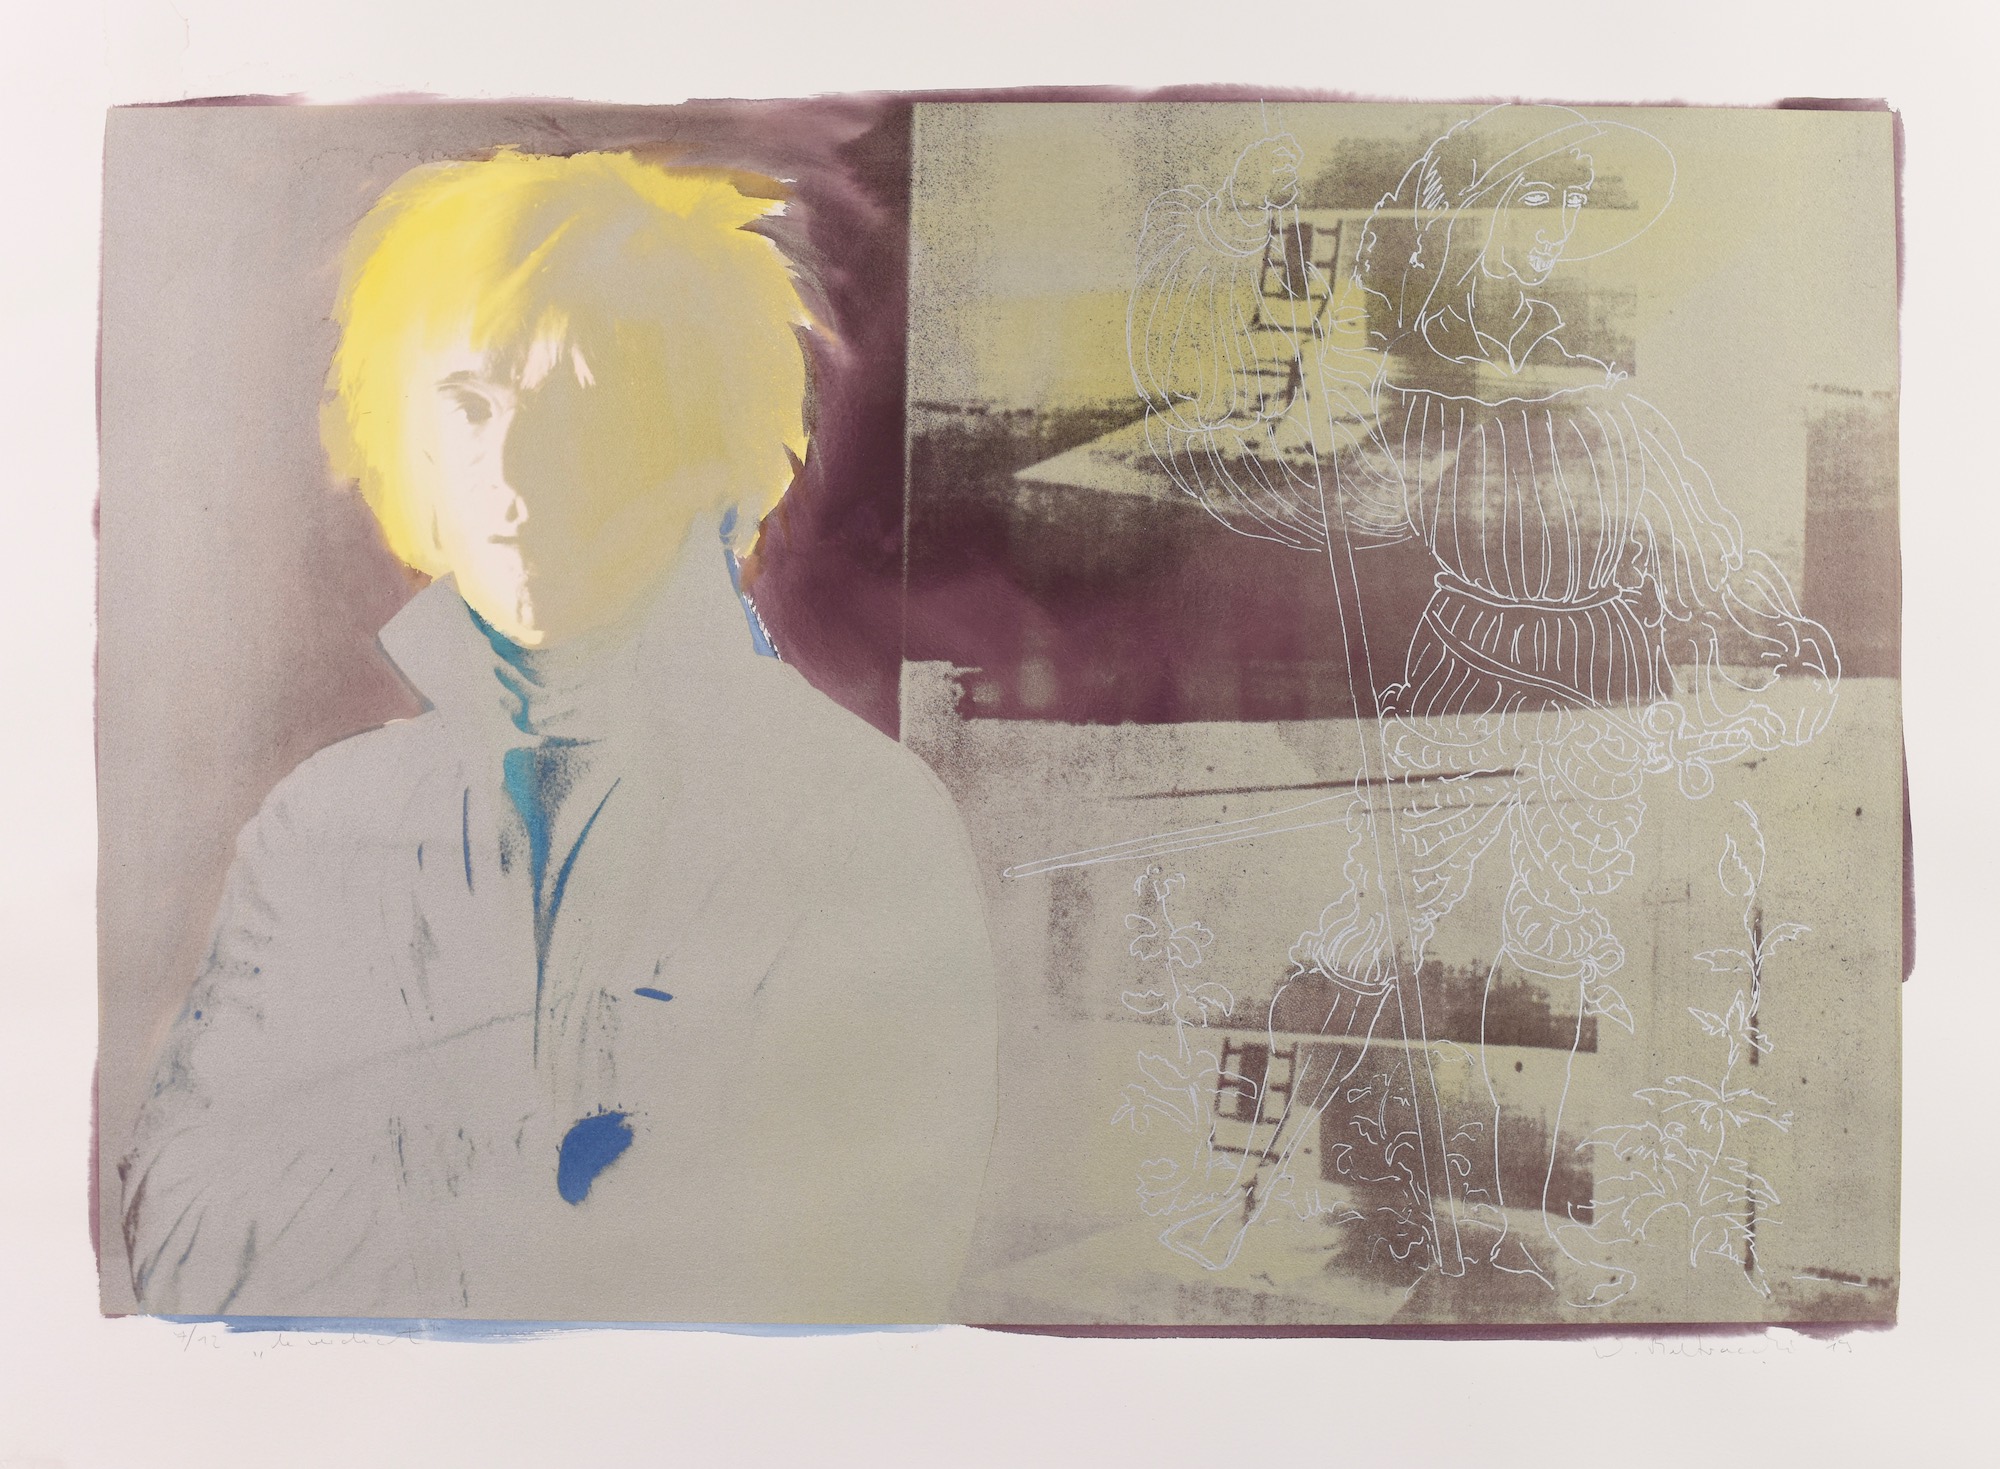 Wolfgang Beltracchi painting of Andy Warhol silkscreen